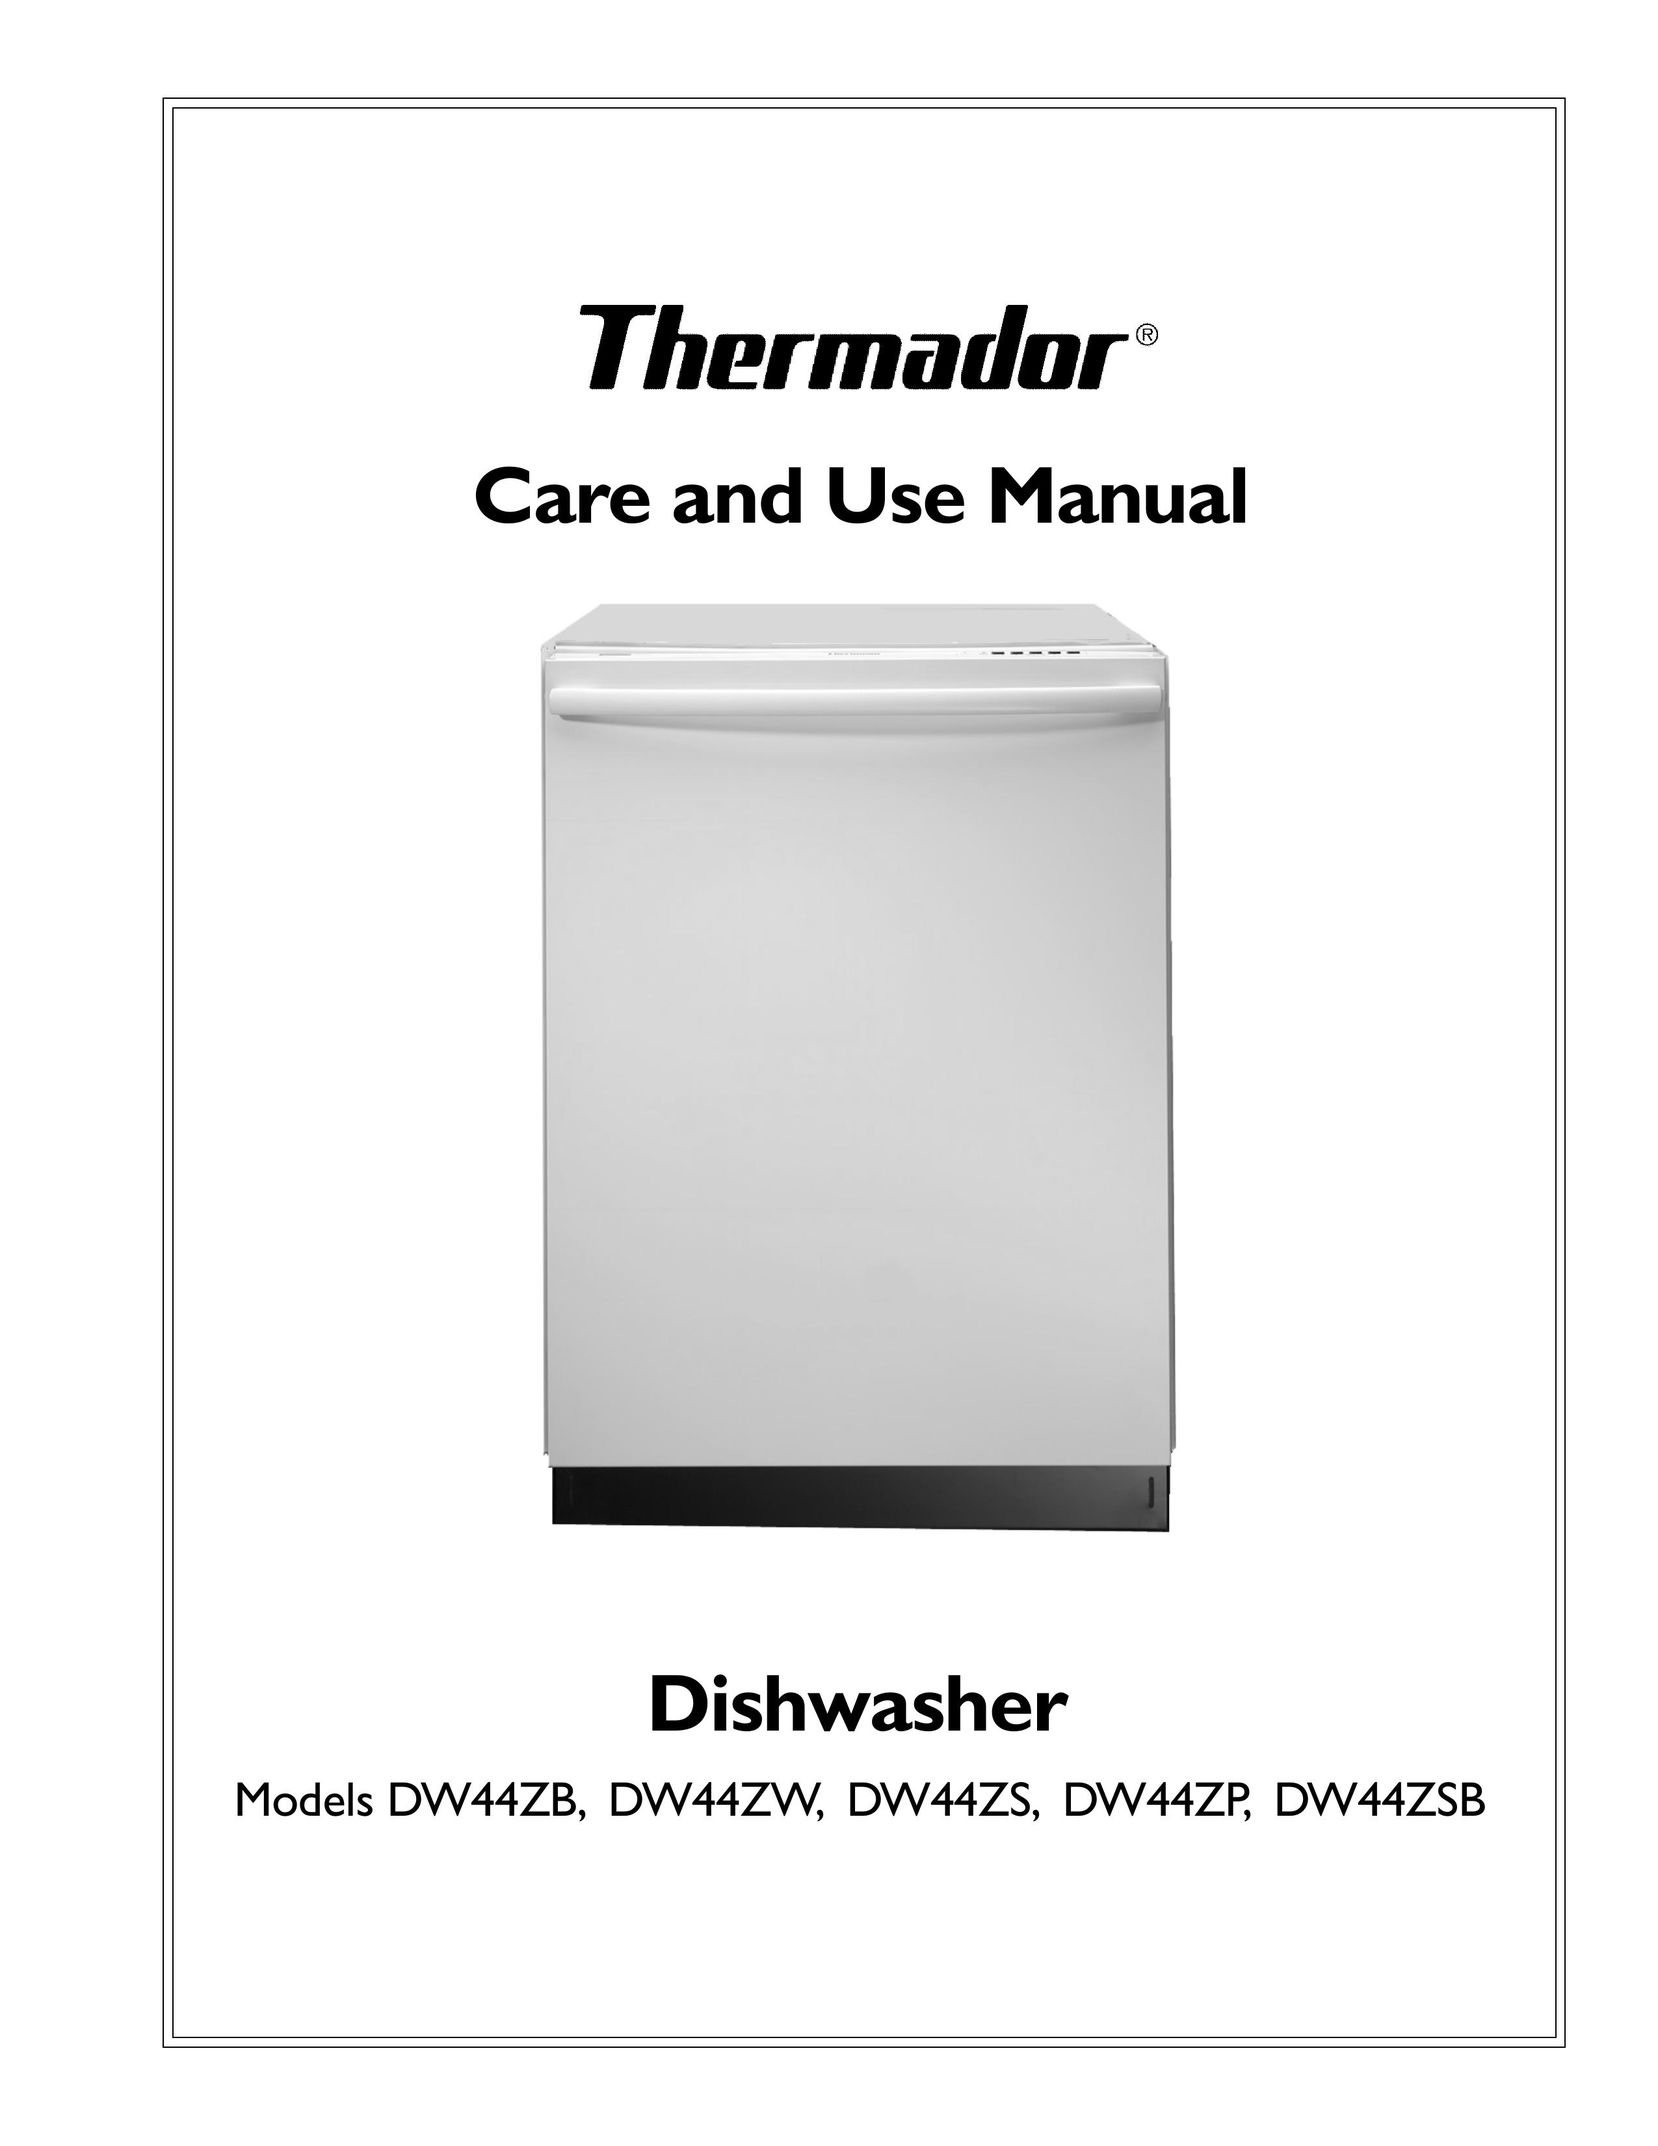 Thermador DW44ZW Dishwasher User Manual